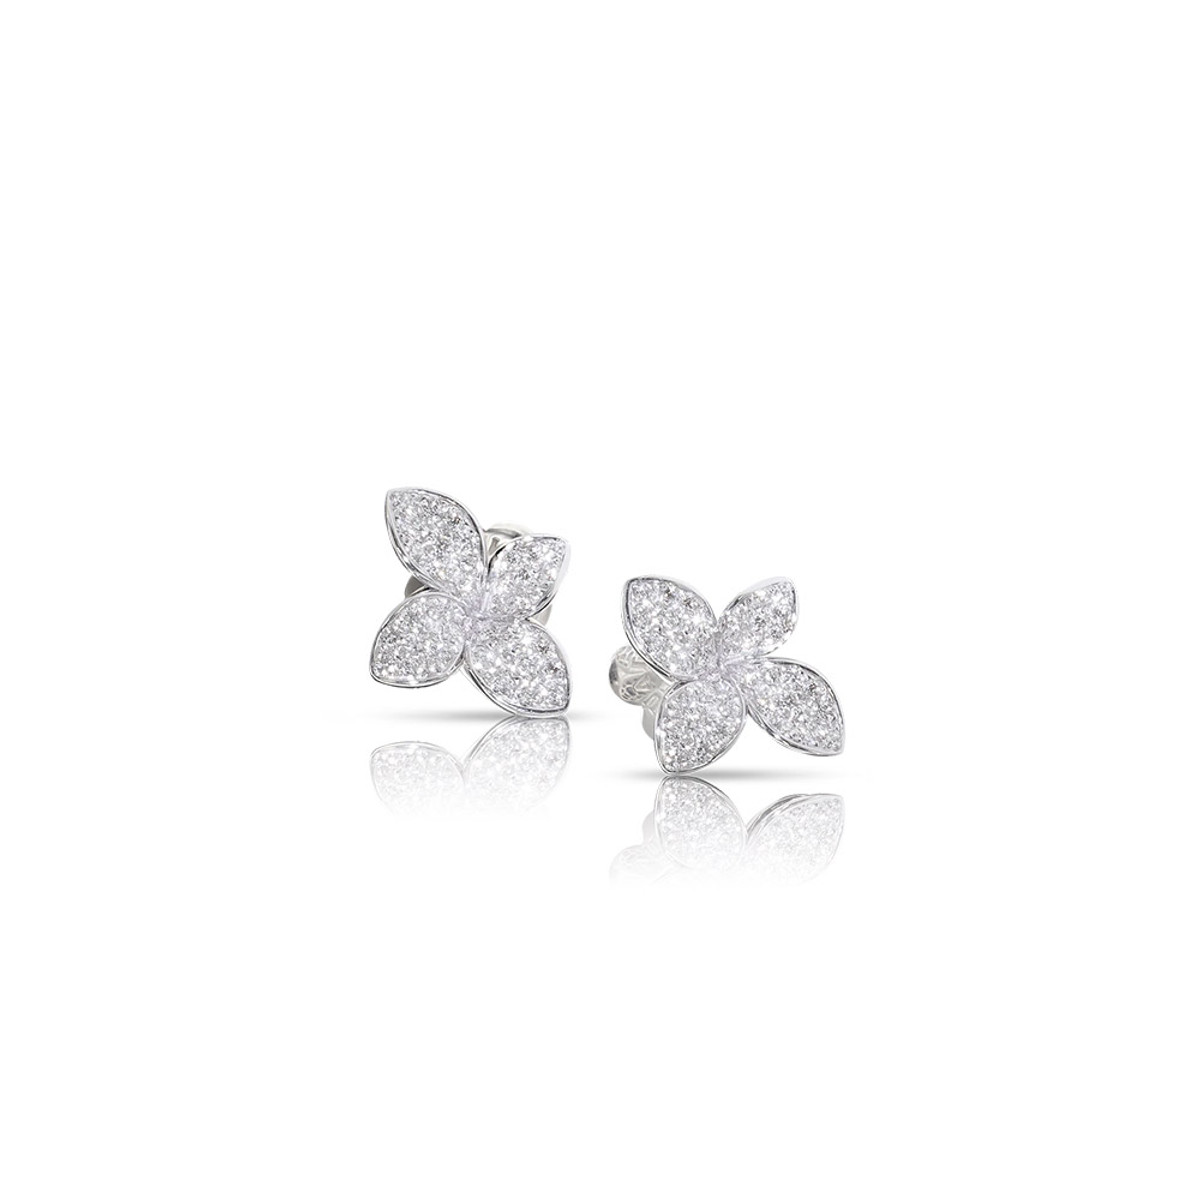 Pasquale Bruni 18K White Gold Petit Garden Diamond Earrings-57240 Product Image